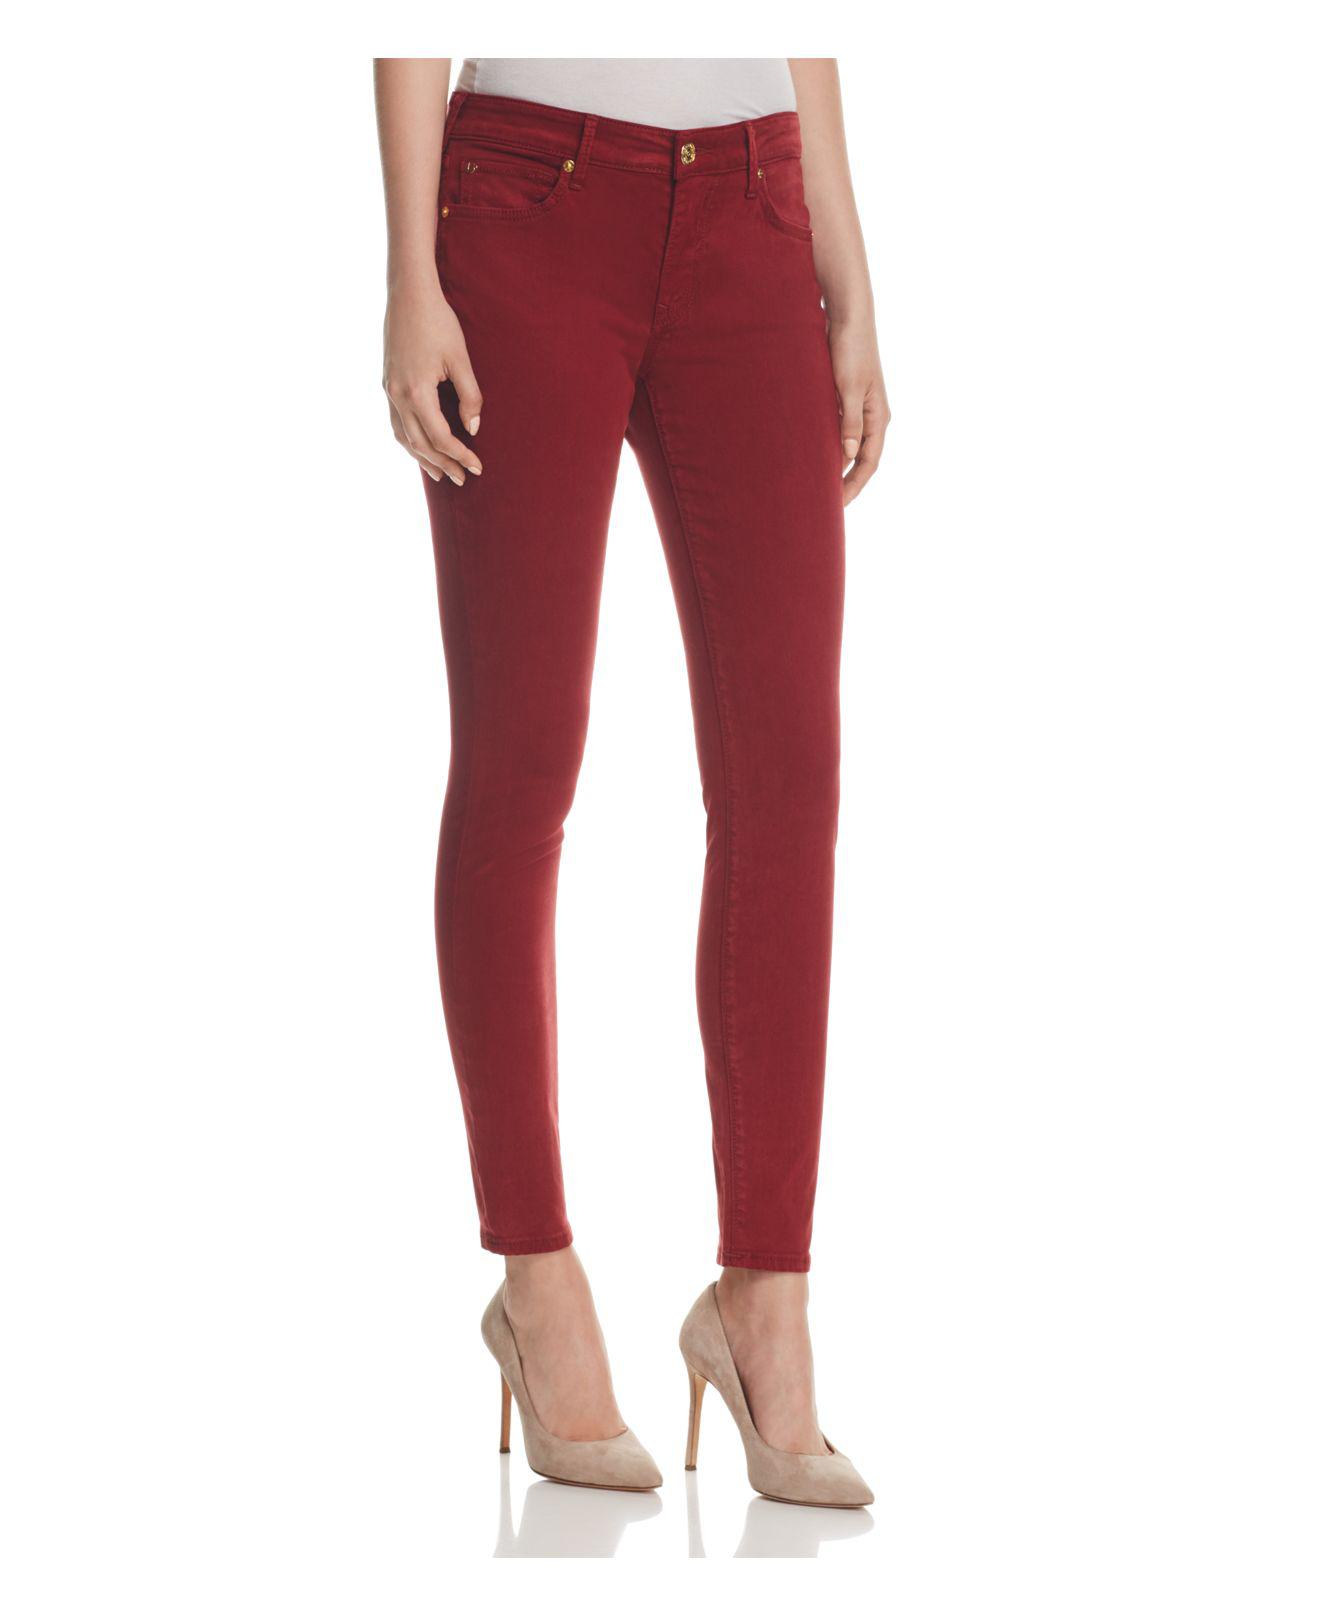 Lyst - True Religion Jennie Curvy Skinny Jeans In Ox Blood in Red